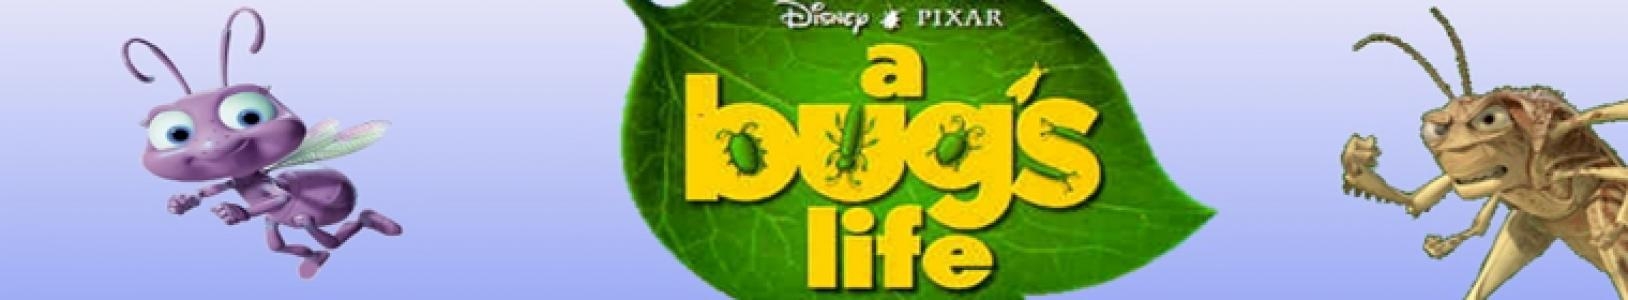 Disney/Pixar A Bug's Life banner